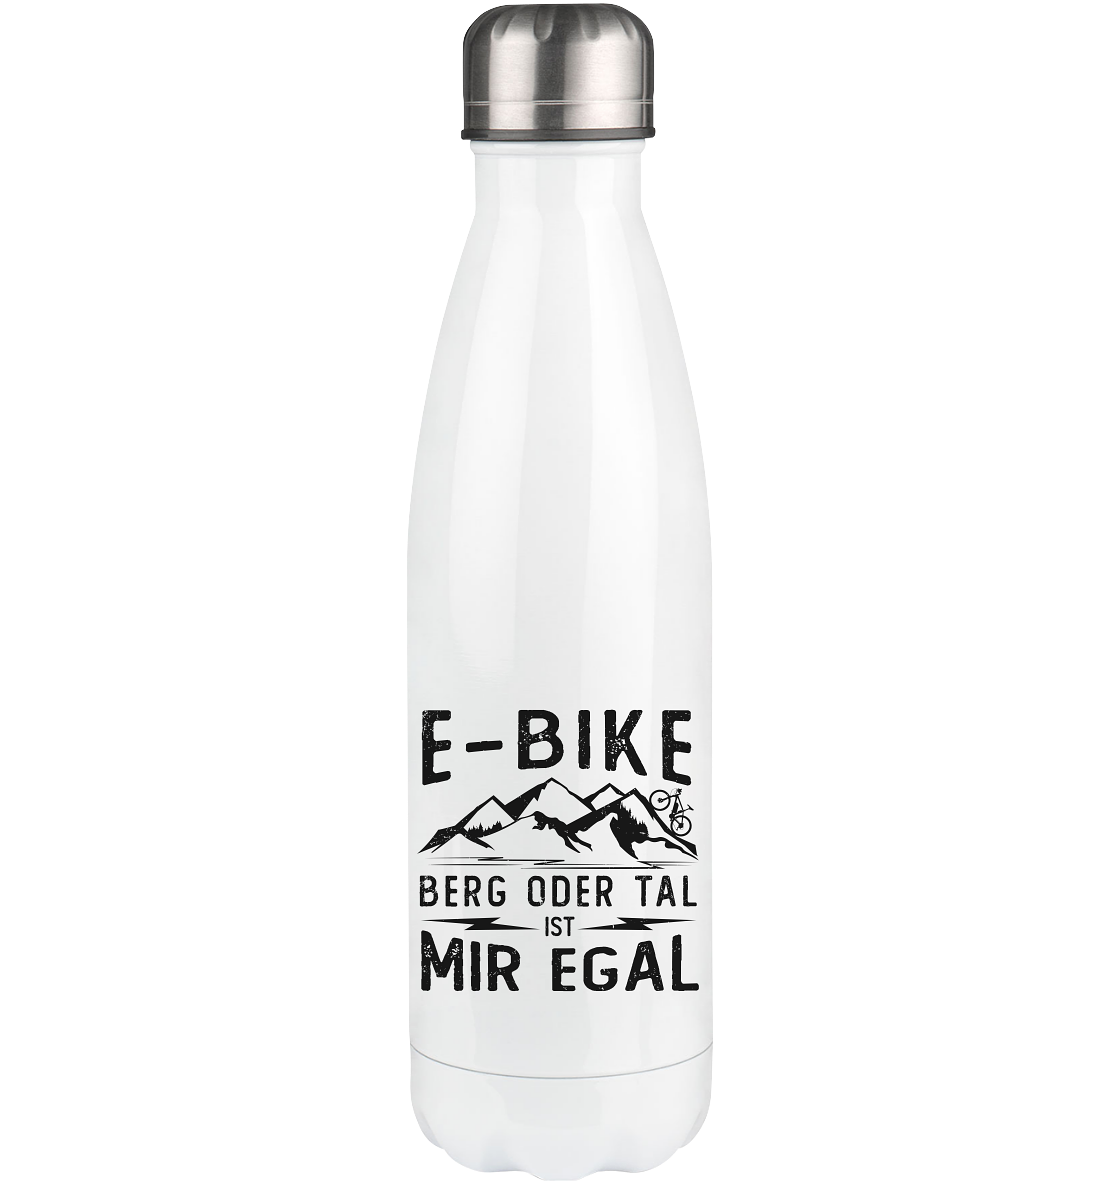 E-Bike - Berg oder Tal ist mir egal - Edelstahl Thermosflasche e-bike 500ml